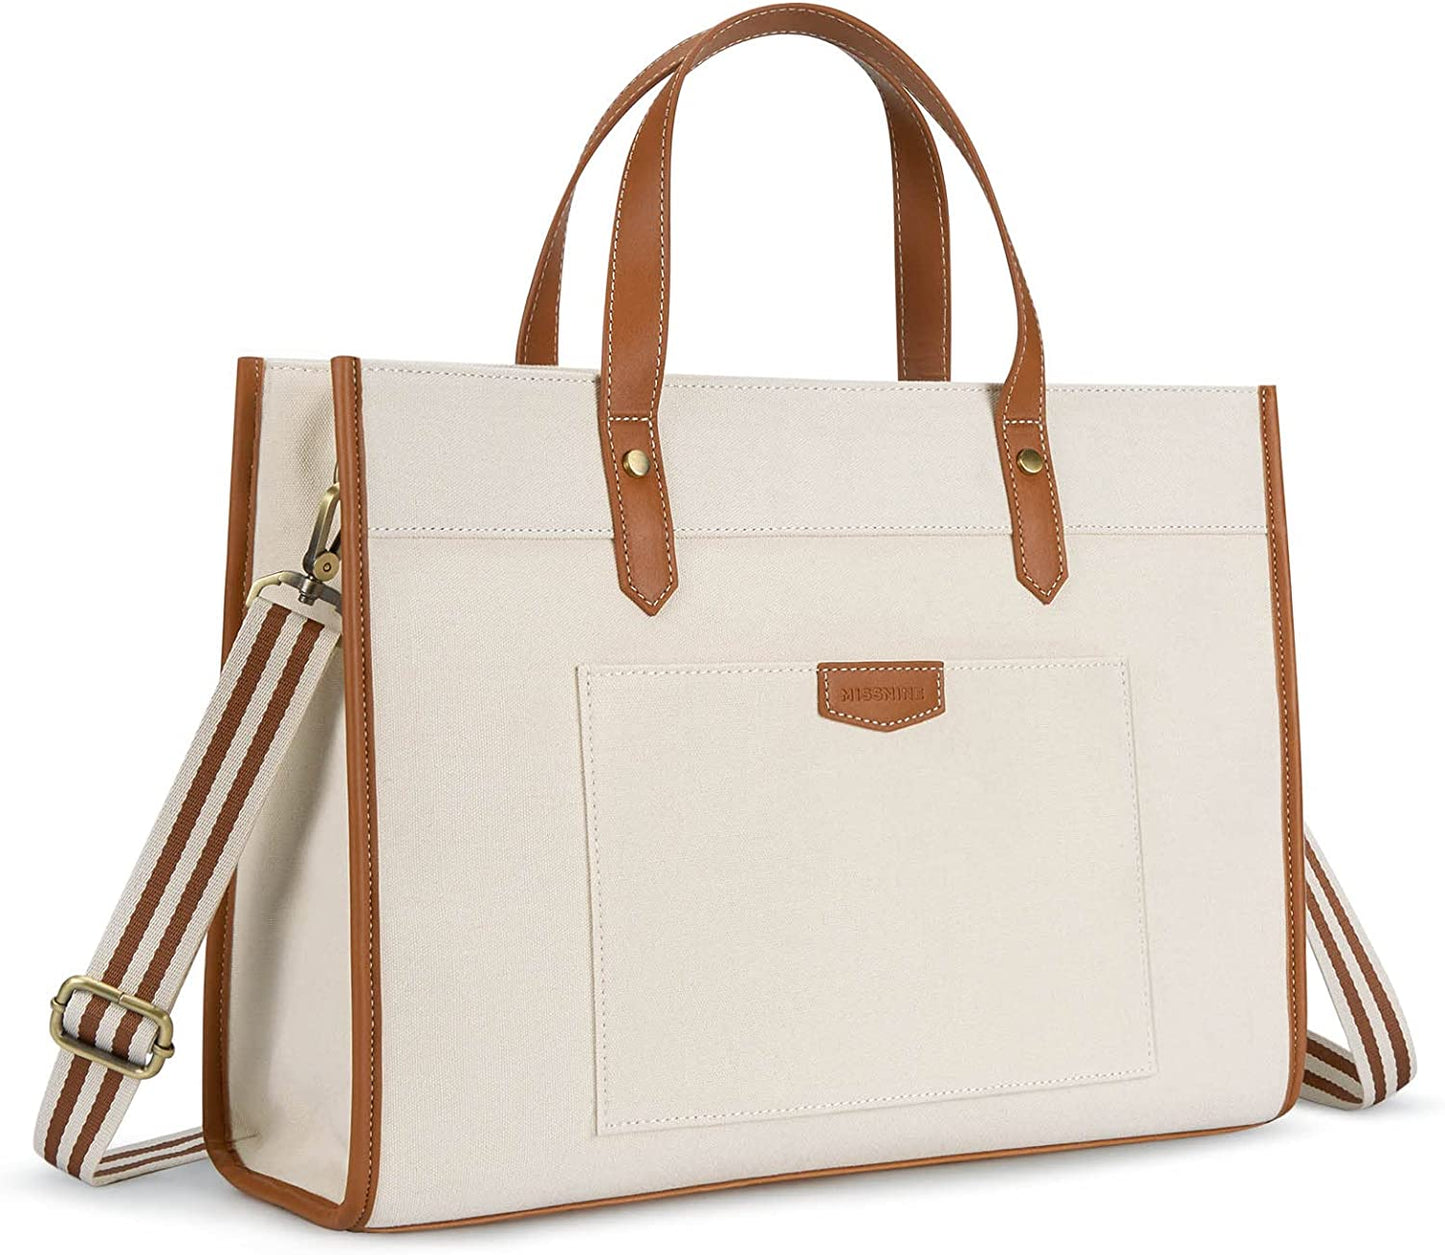 Bag Missnine Canvas Laptop Bag 15.6 inch Work Shoulder Bags Casual Briefcase Handbag for Travel, Office, School